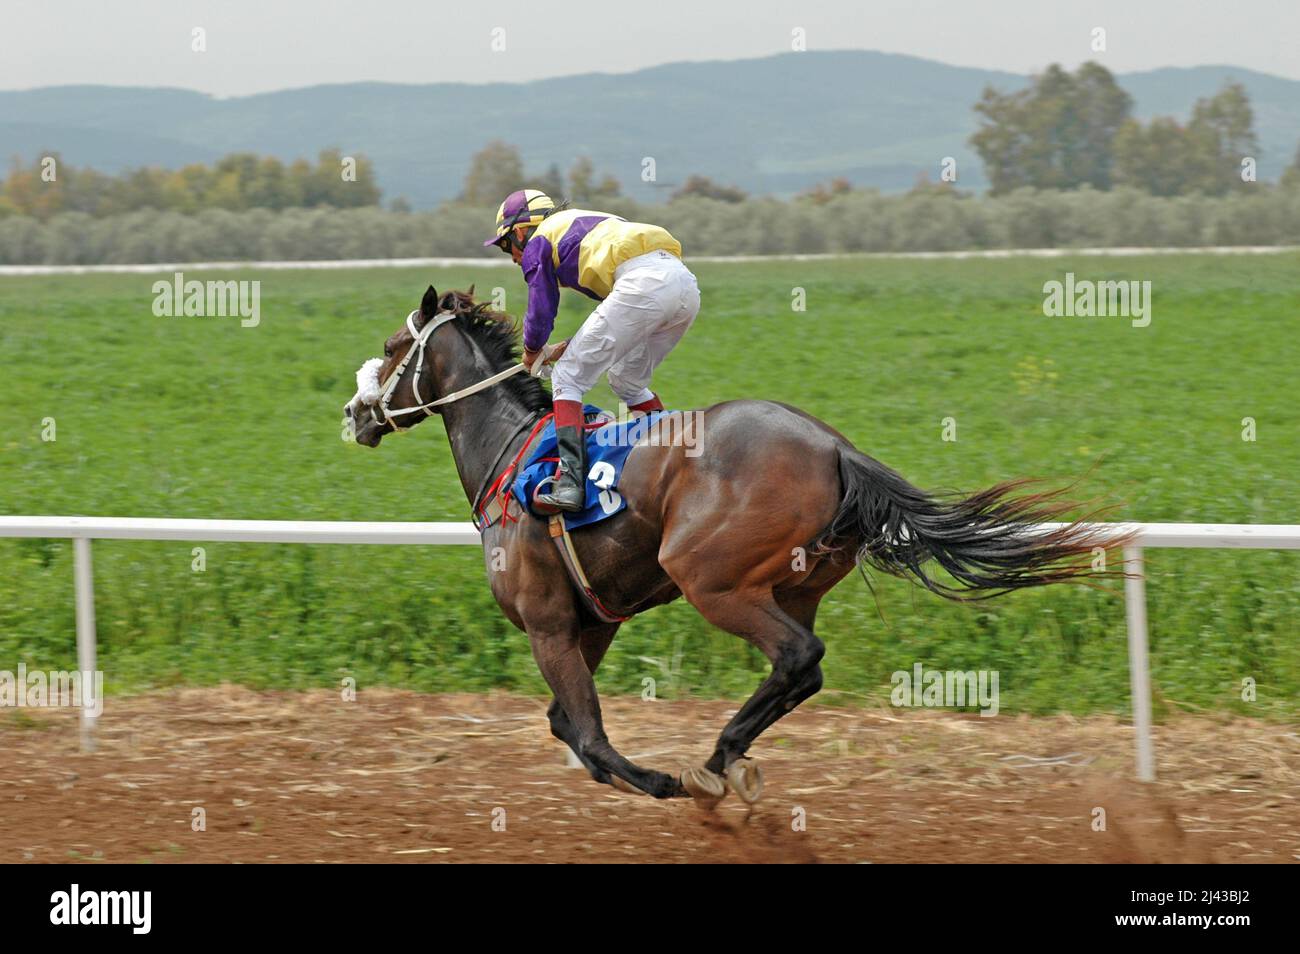 Horse race - single horse and rider Stock Photo